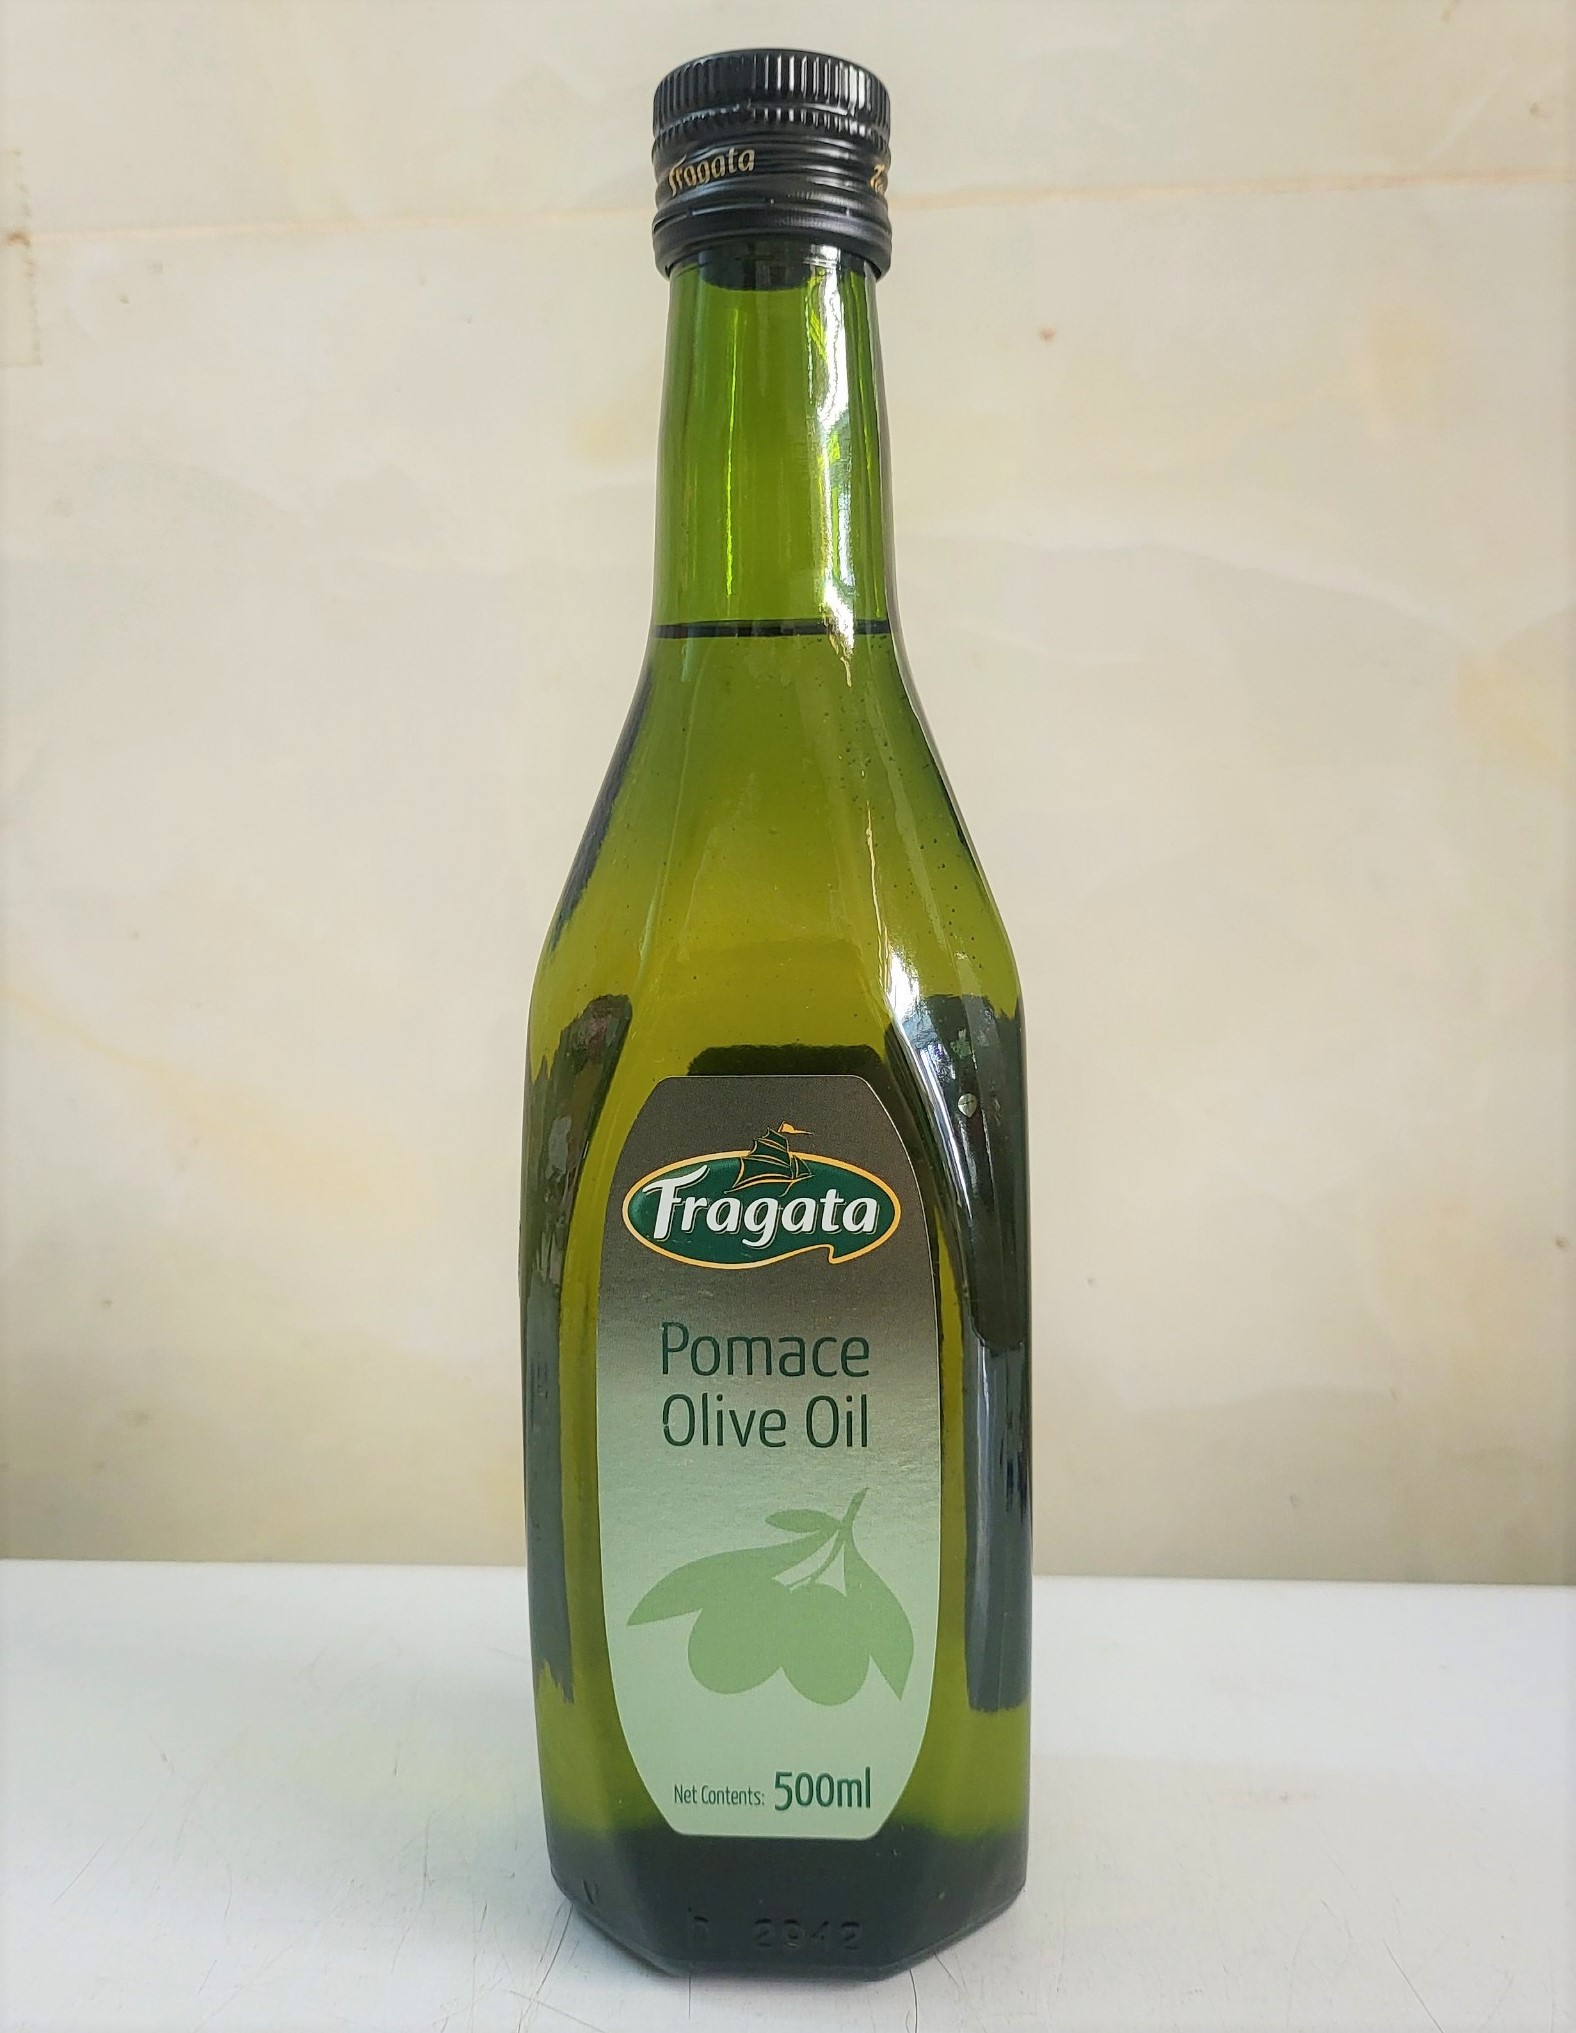 Chai 500ml POMACE  DẦU Ô LIU TINH CHẾ Spain FRAGATA Olive Oil tgc